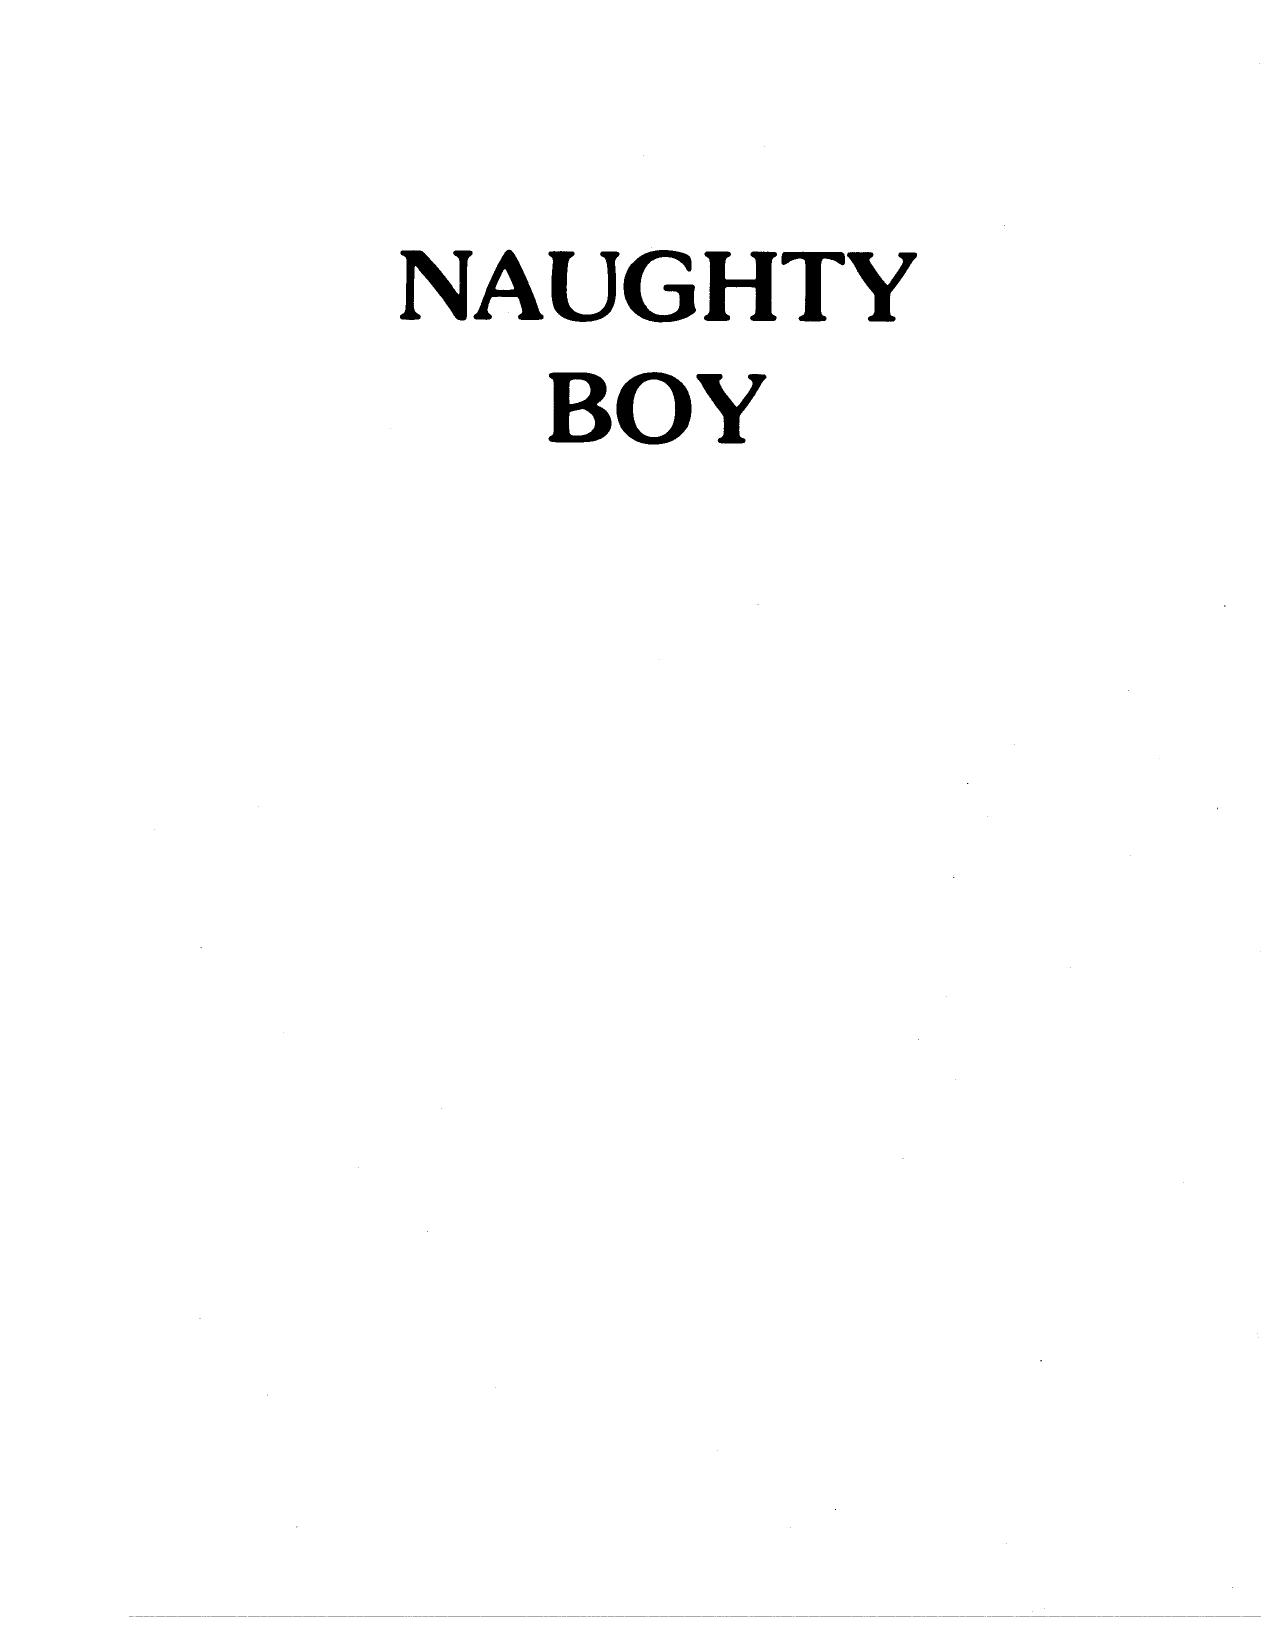 naughtyboy